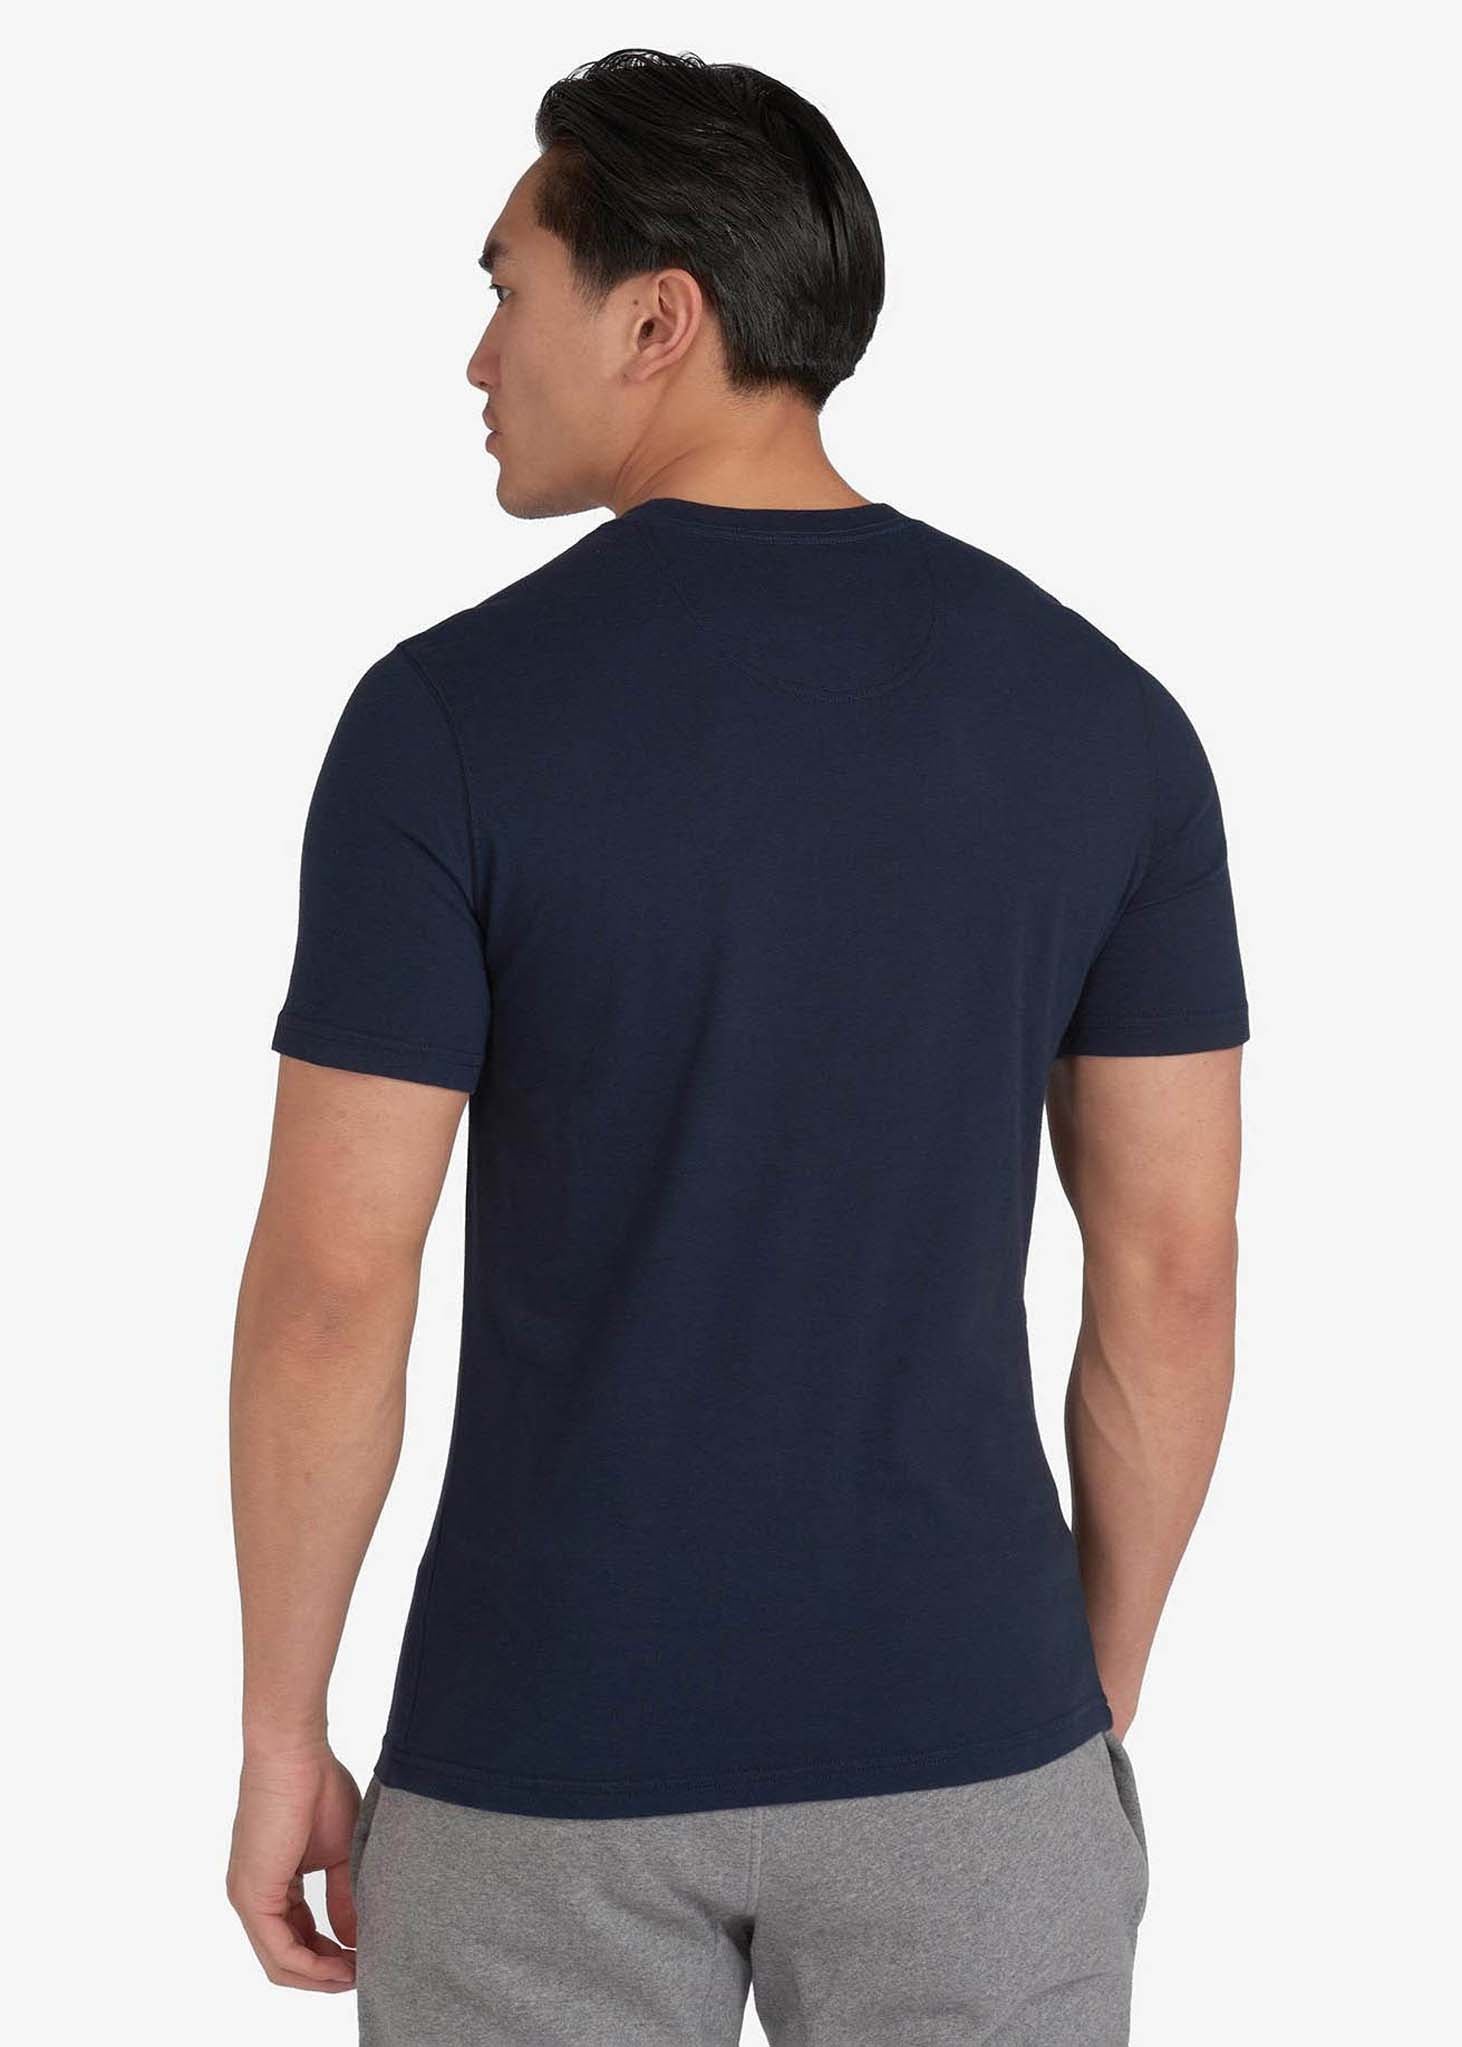 Barbour International T-shirts  Small logo tee - international navy 